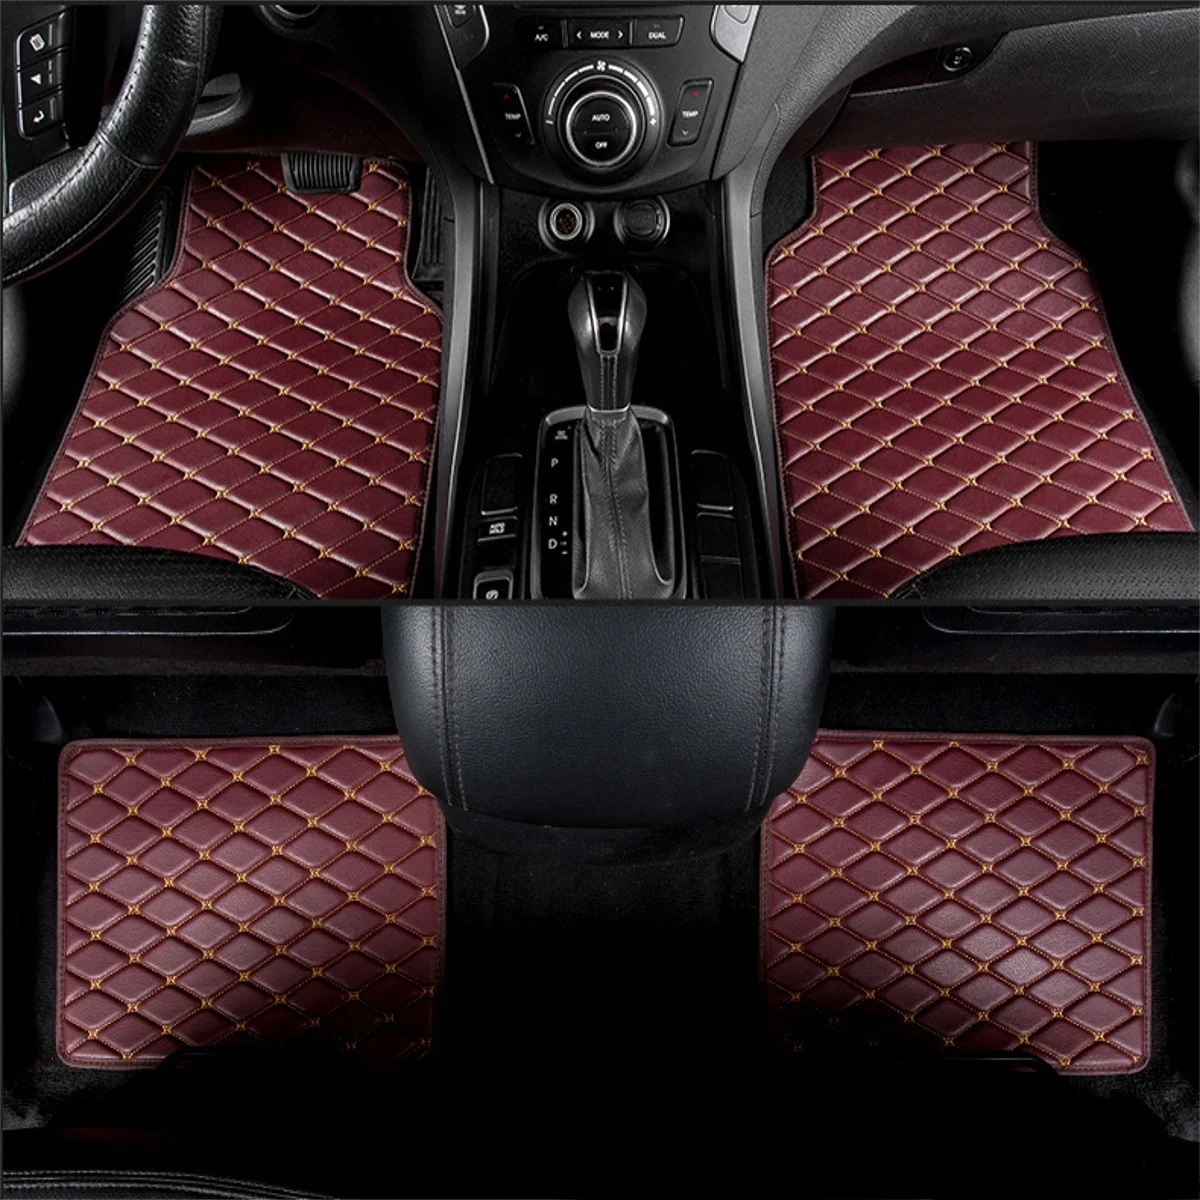 

4PCS Universal Car Floor Mats For MITSUBISHI ASX 308 Eclipse Grandis Montero Lancer Pajero Outlander Auto Interior Accessories